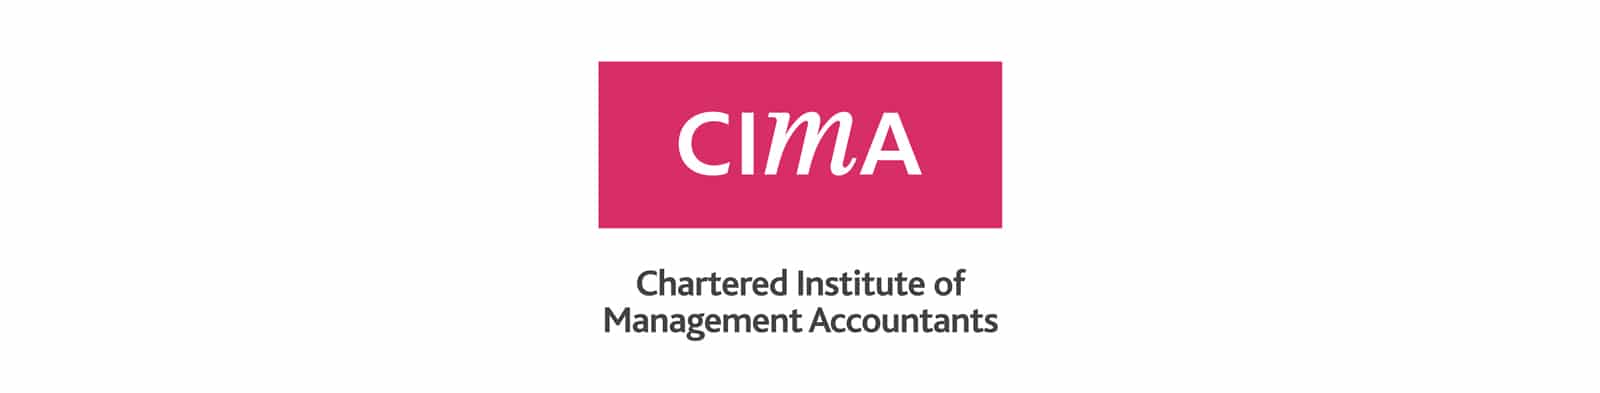 CIMA Programme